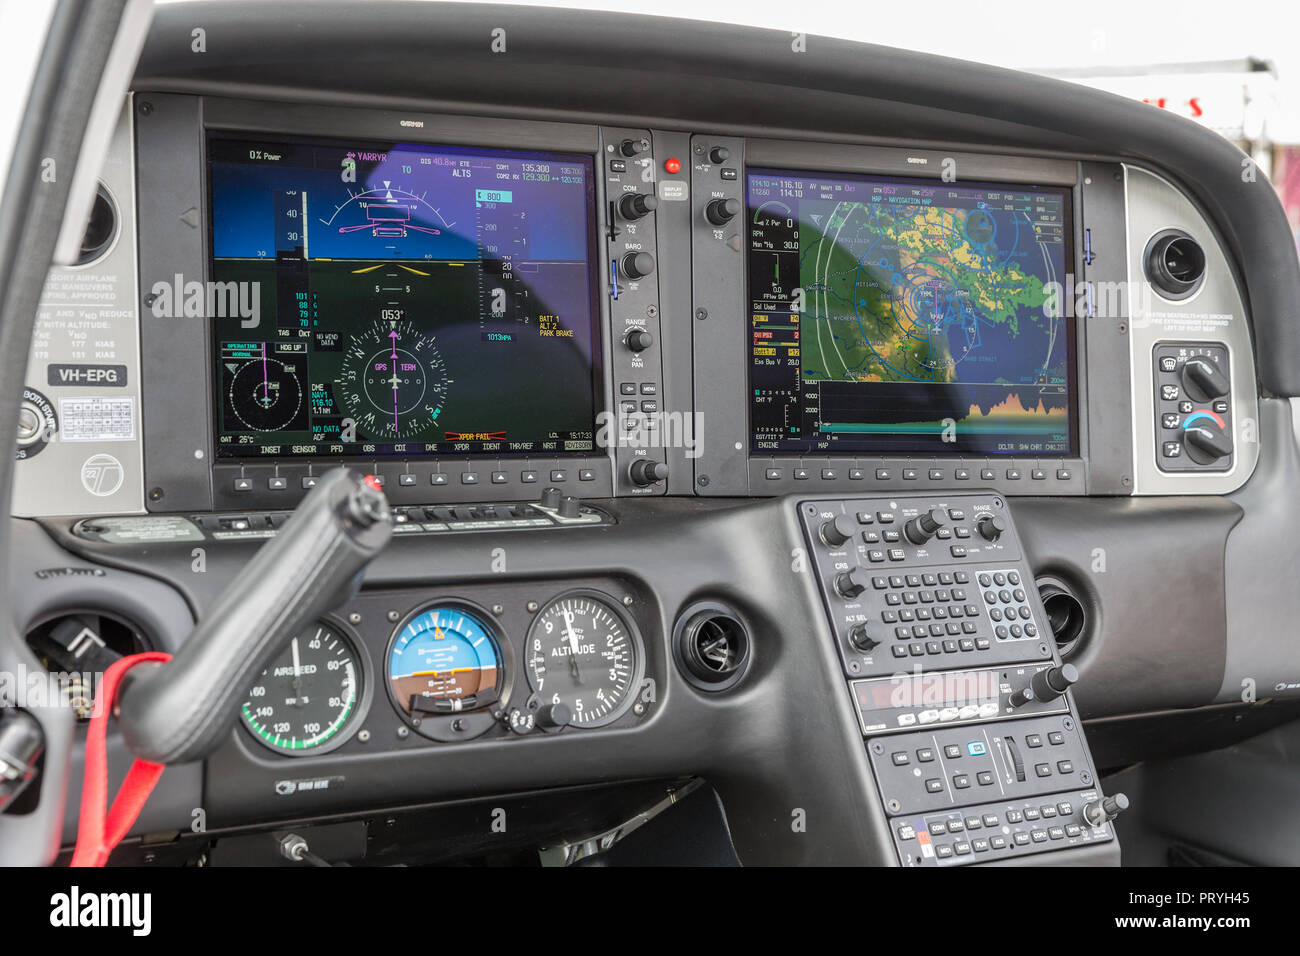 Cockpit of Cirrus SR22T VH-EPG high performance light aircraft. Stock Photo